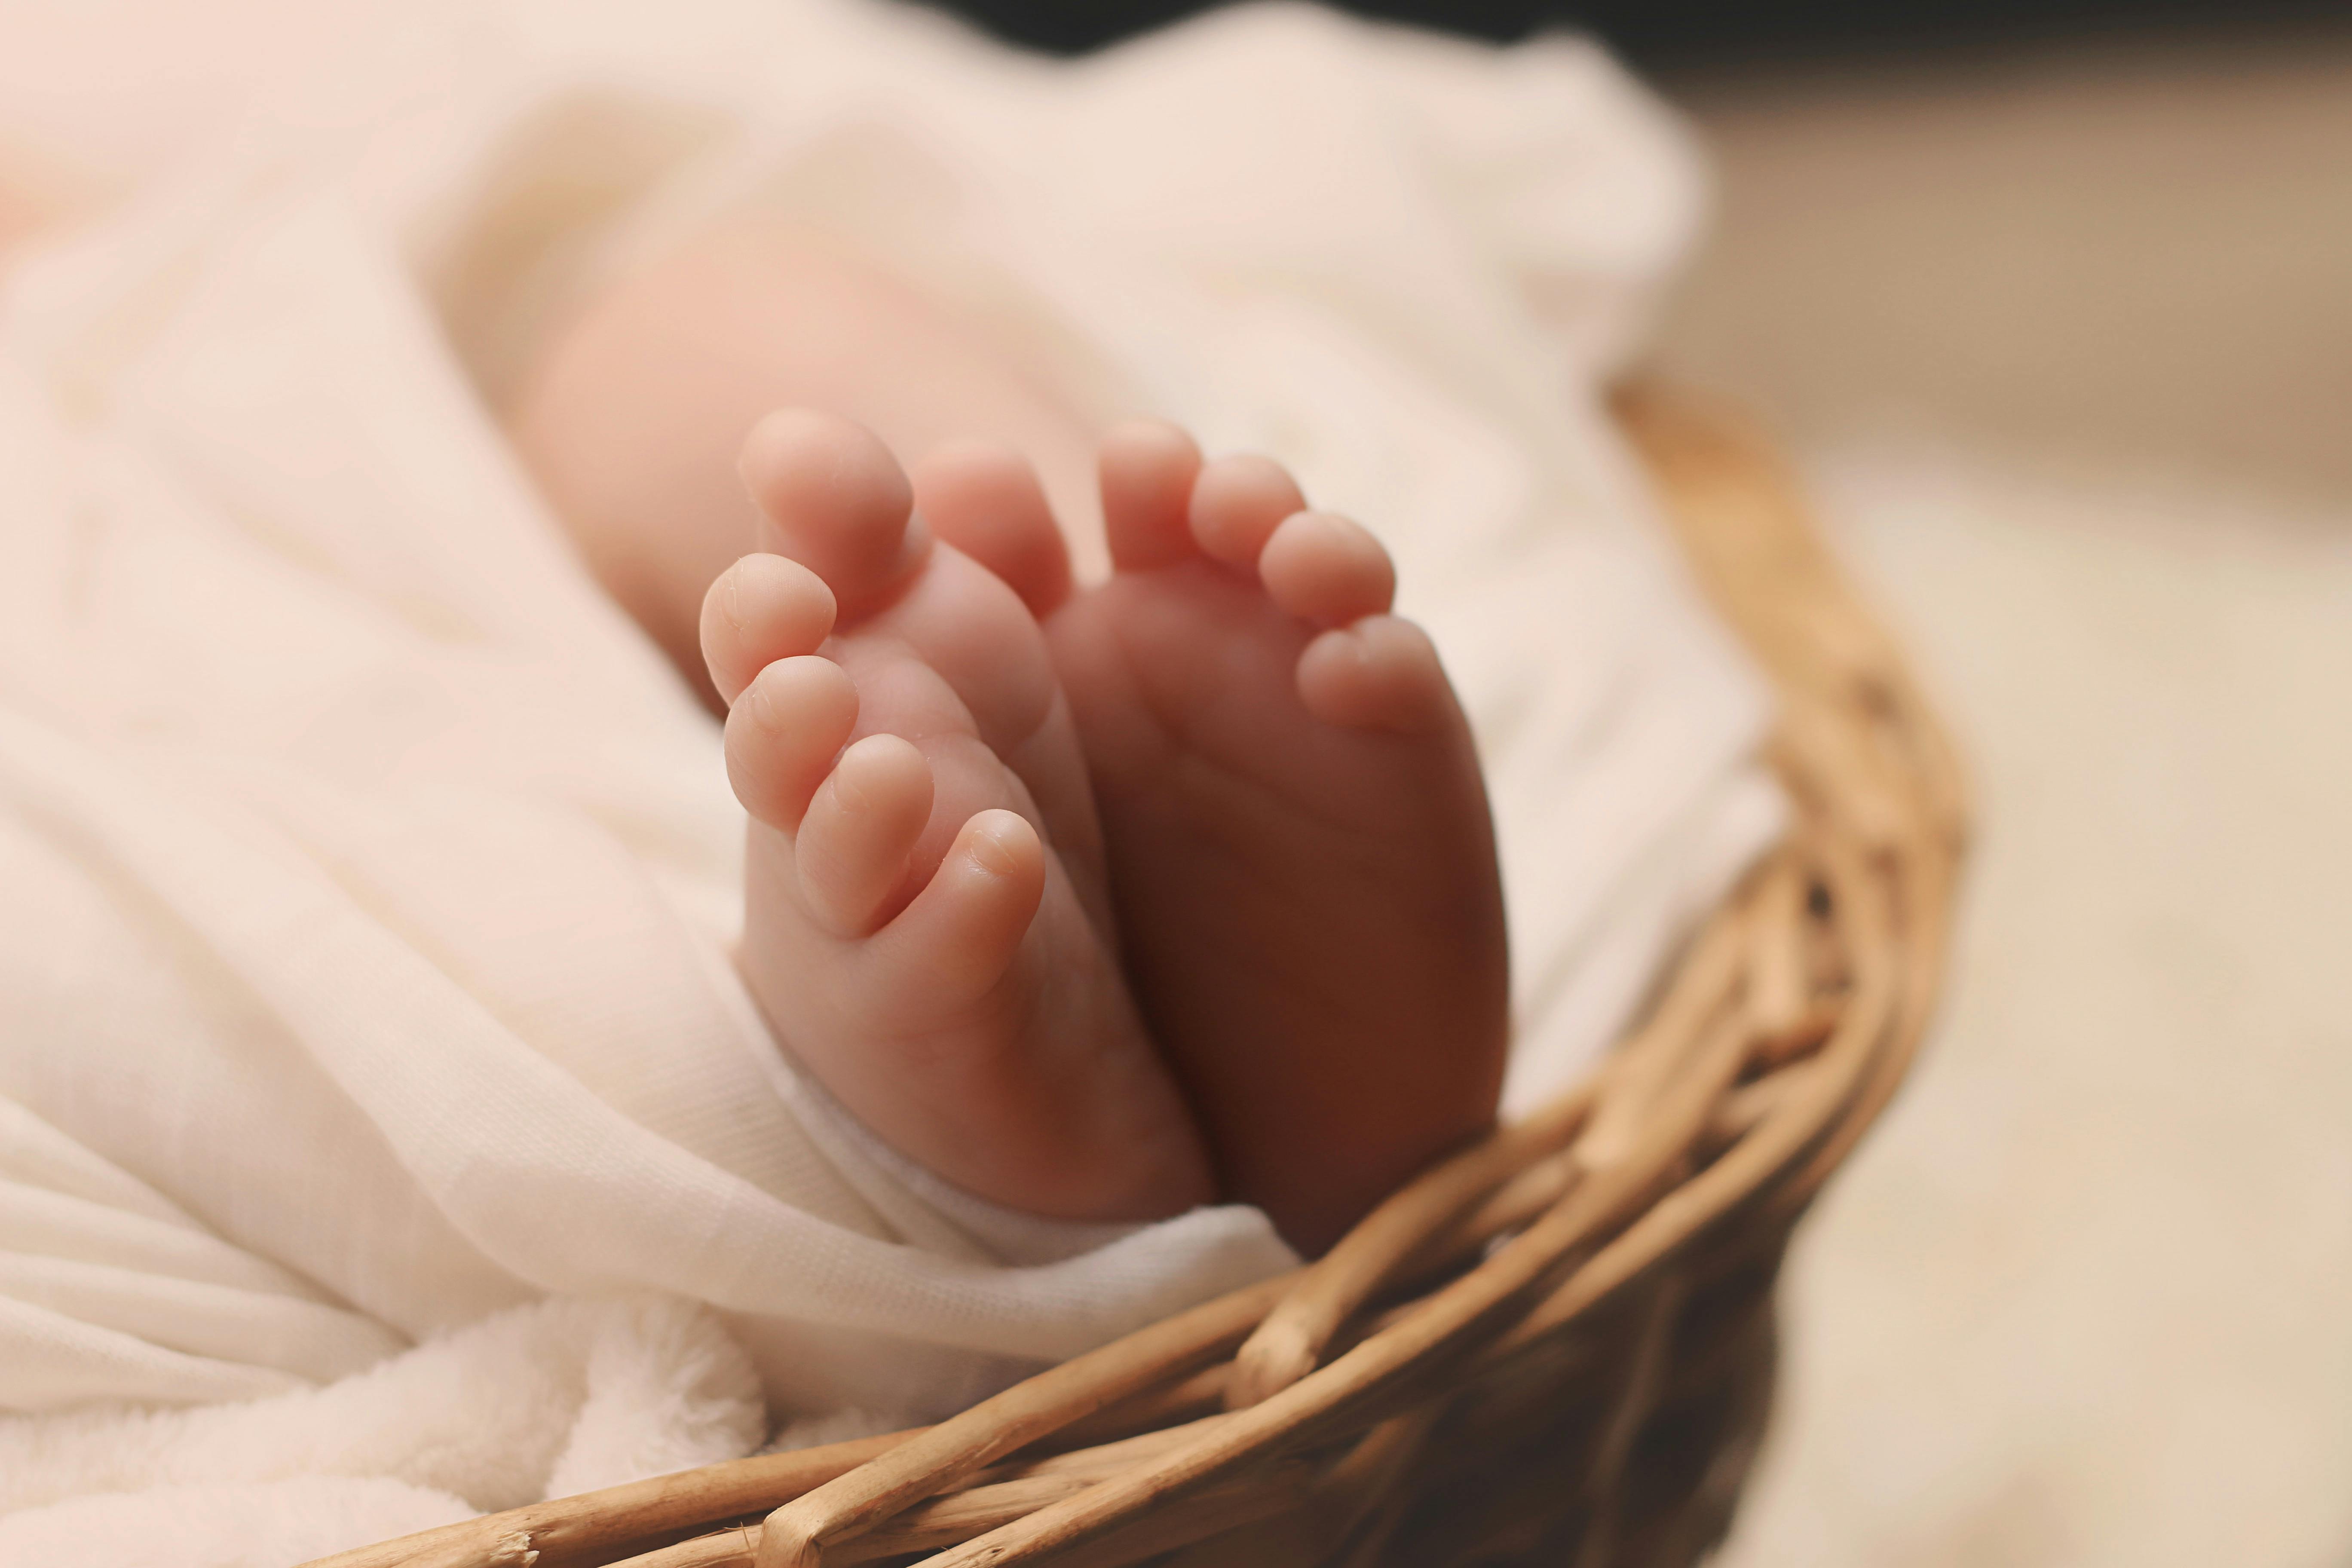 newborn-baby-feet-basket-161534.jpeg (5472×3648)